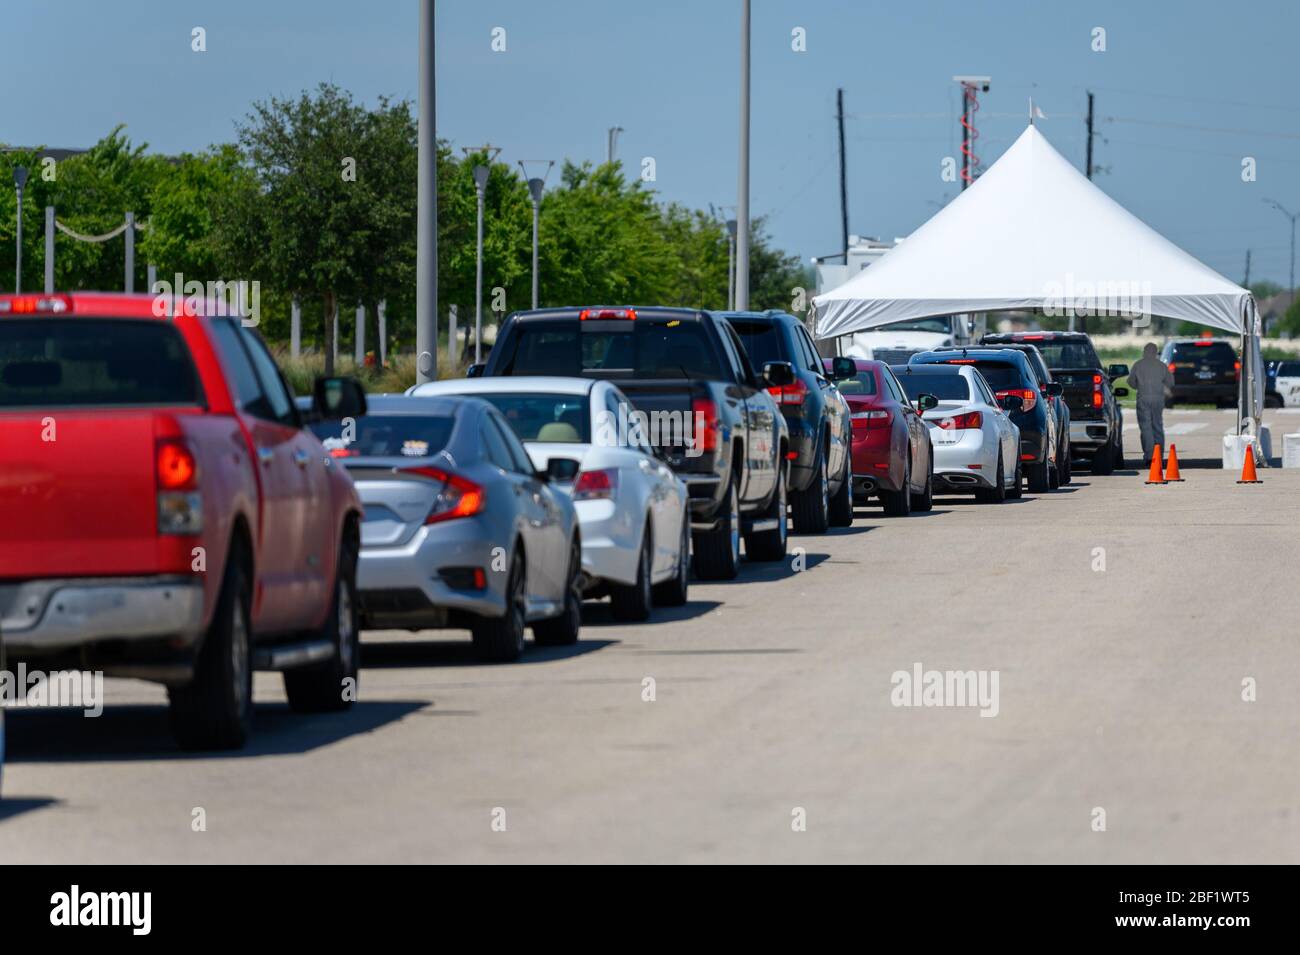 Sugar Land, Texas - April 16, 2020: Cars line up at city COVID-19 drive-through testing center Stock Photo